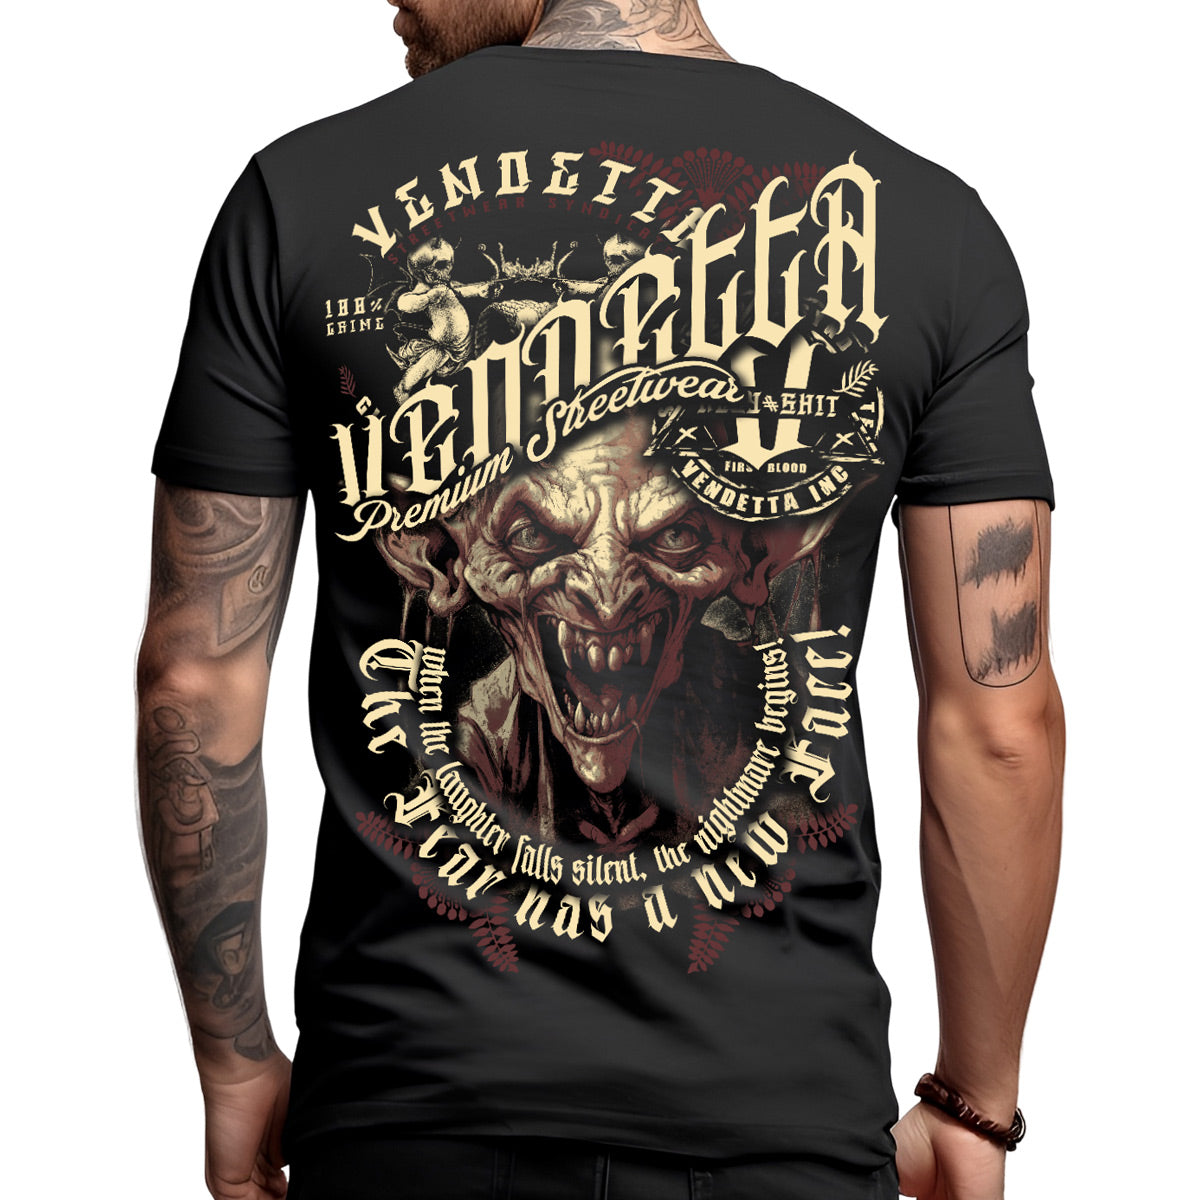 Vendetta Inc. Shirt Silent black 1312